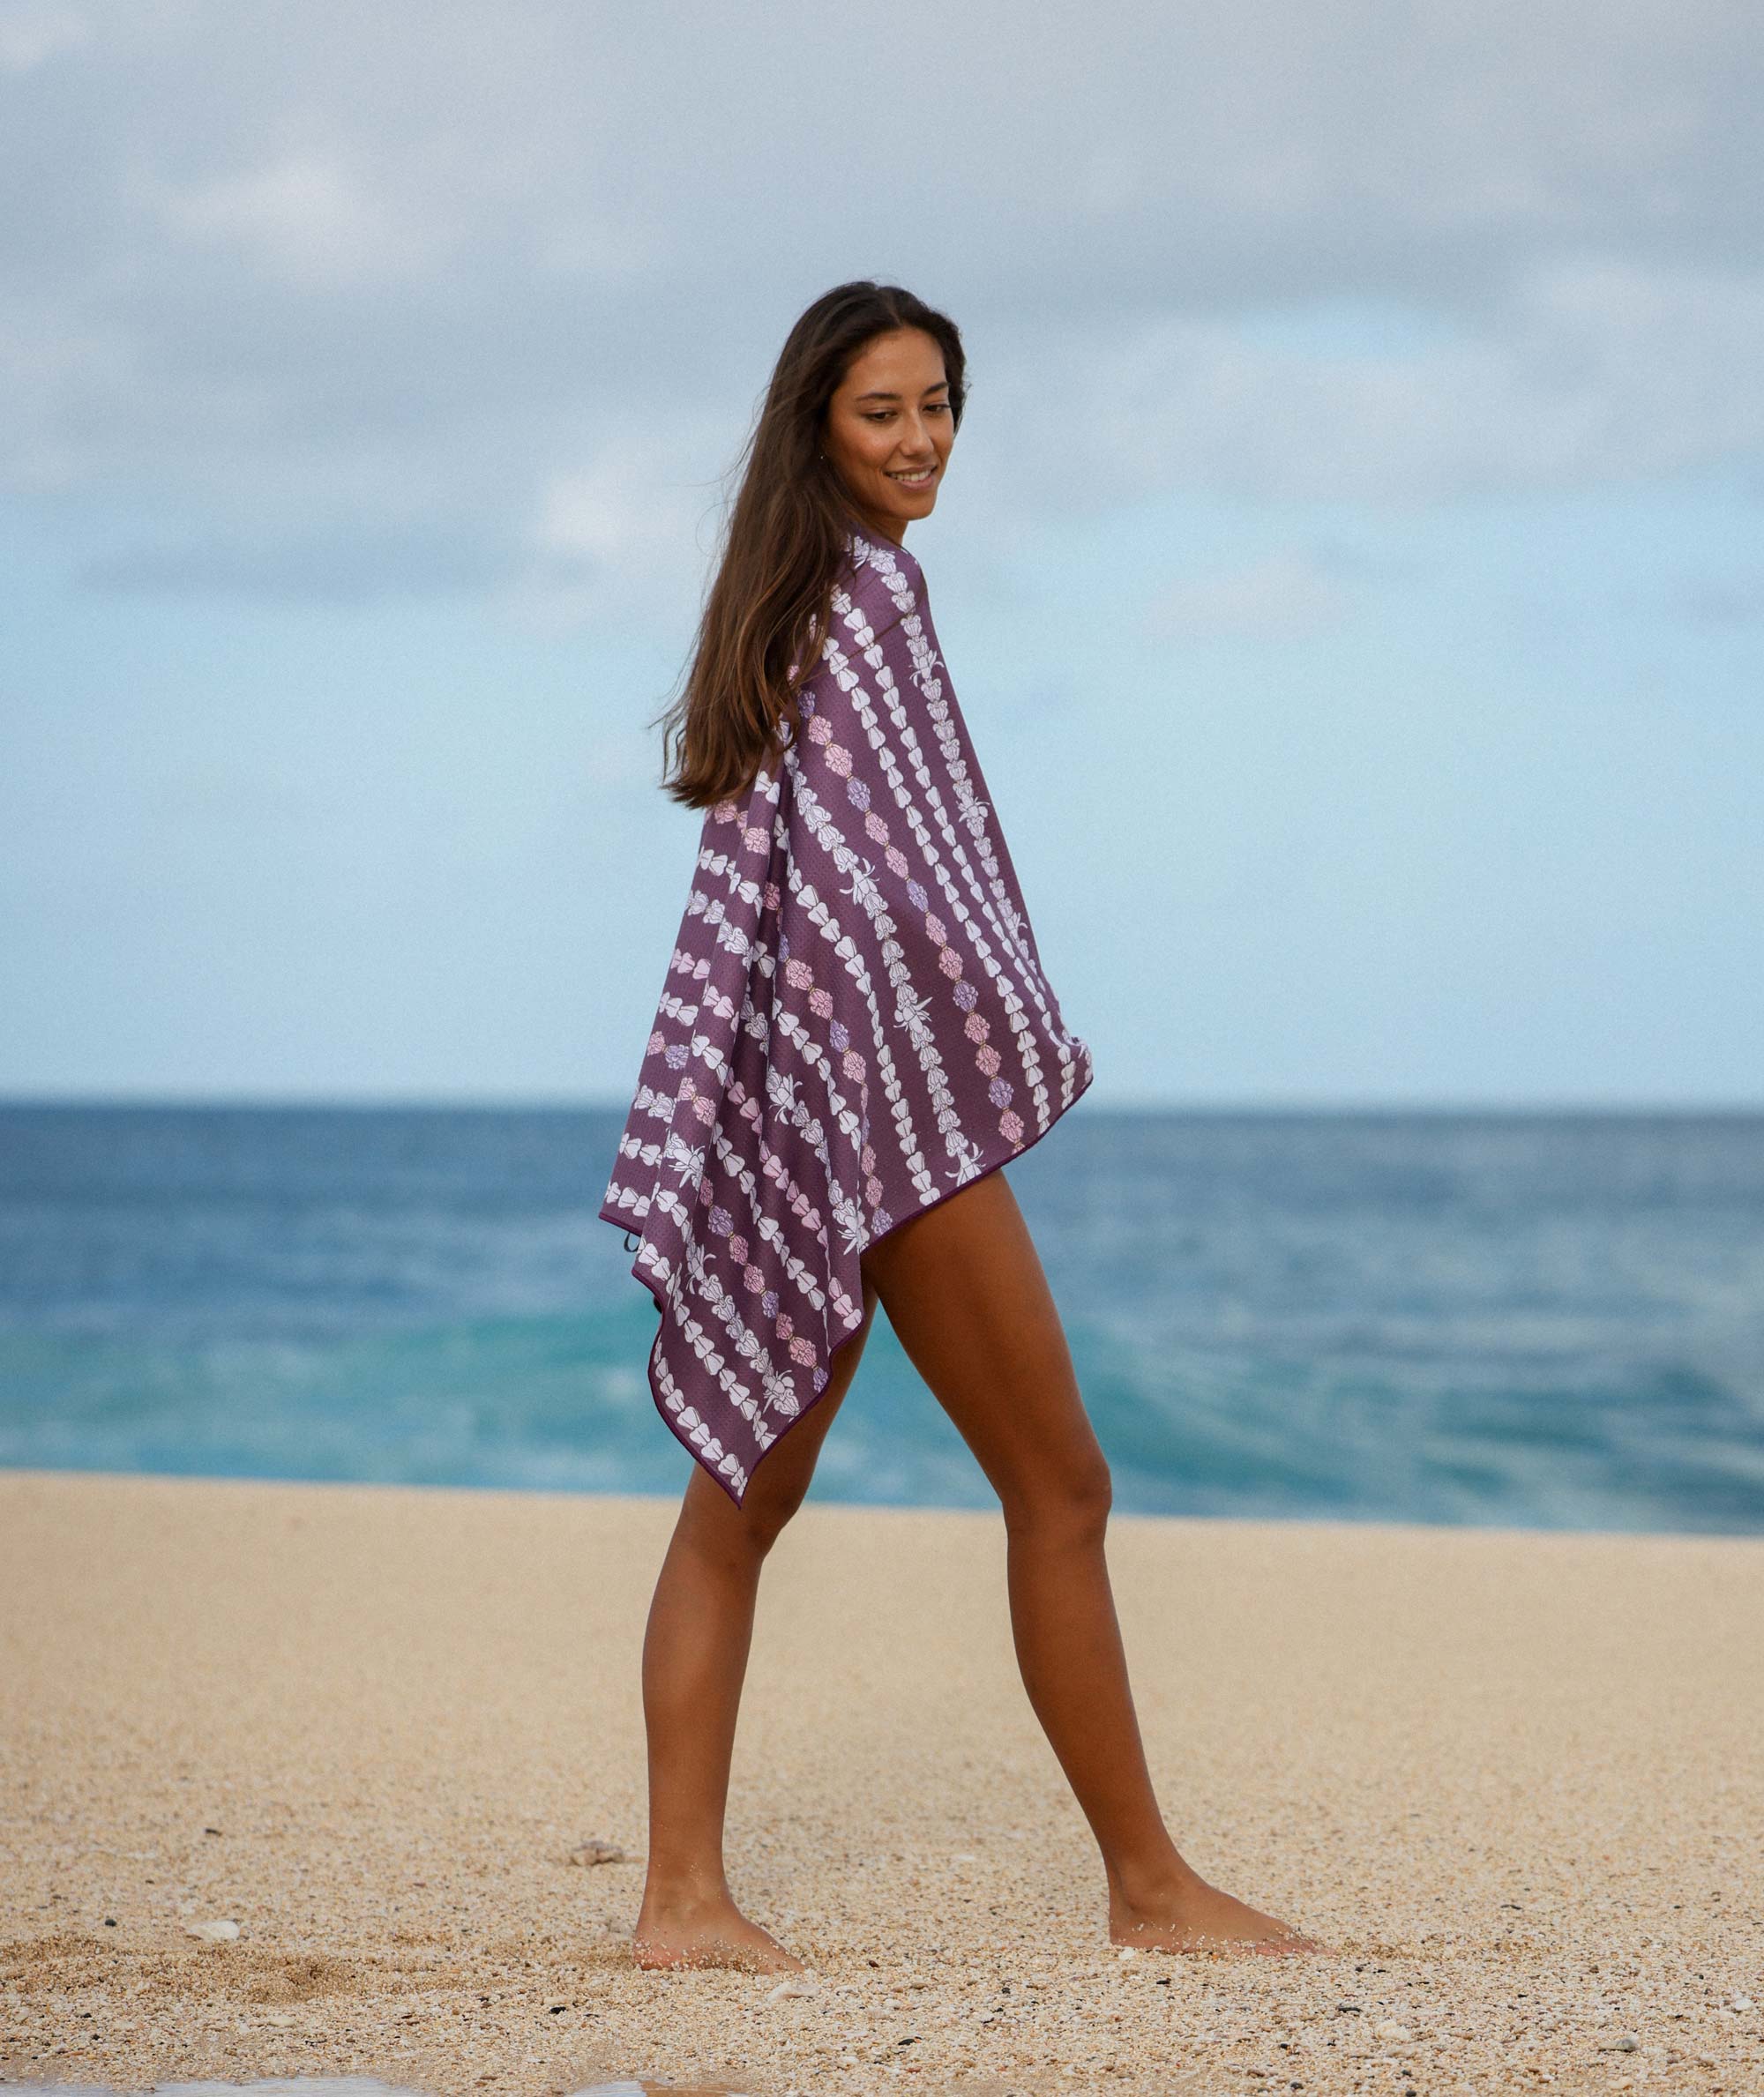 Tag Aloha Co. - Sustainable & Conscious Beachwear Designed in Hawaii